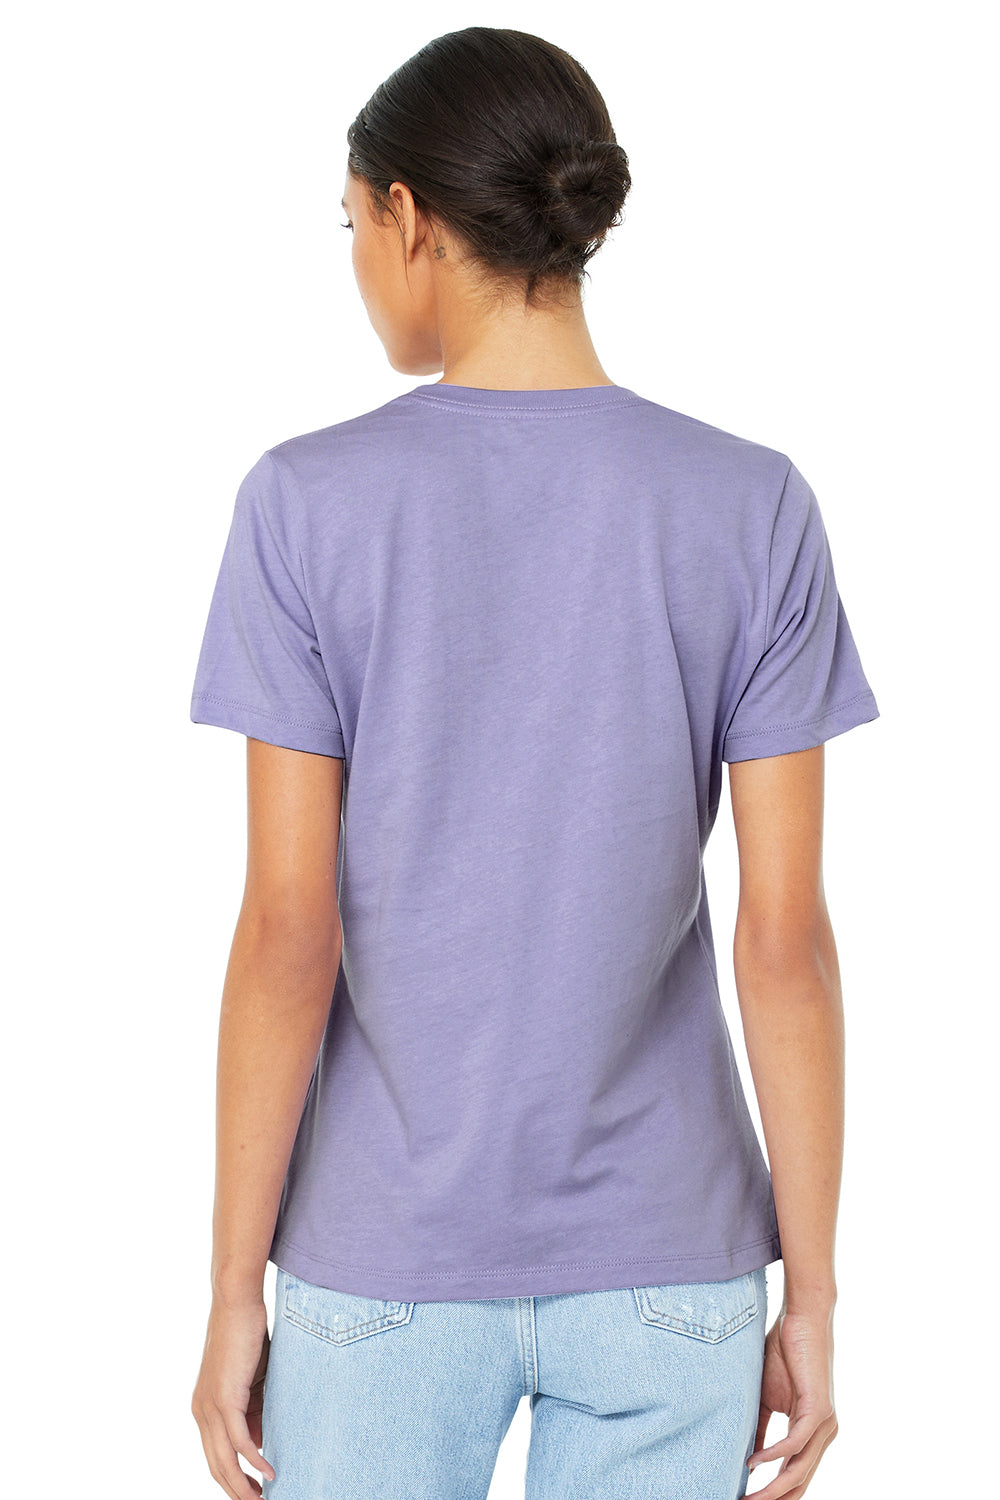 Bella + Canvas BC6400/B6400/6400 Womens Relaxed Jersey Short Sleeve Crewneck T-Shirt Dark Lavender Purple Model Back